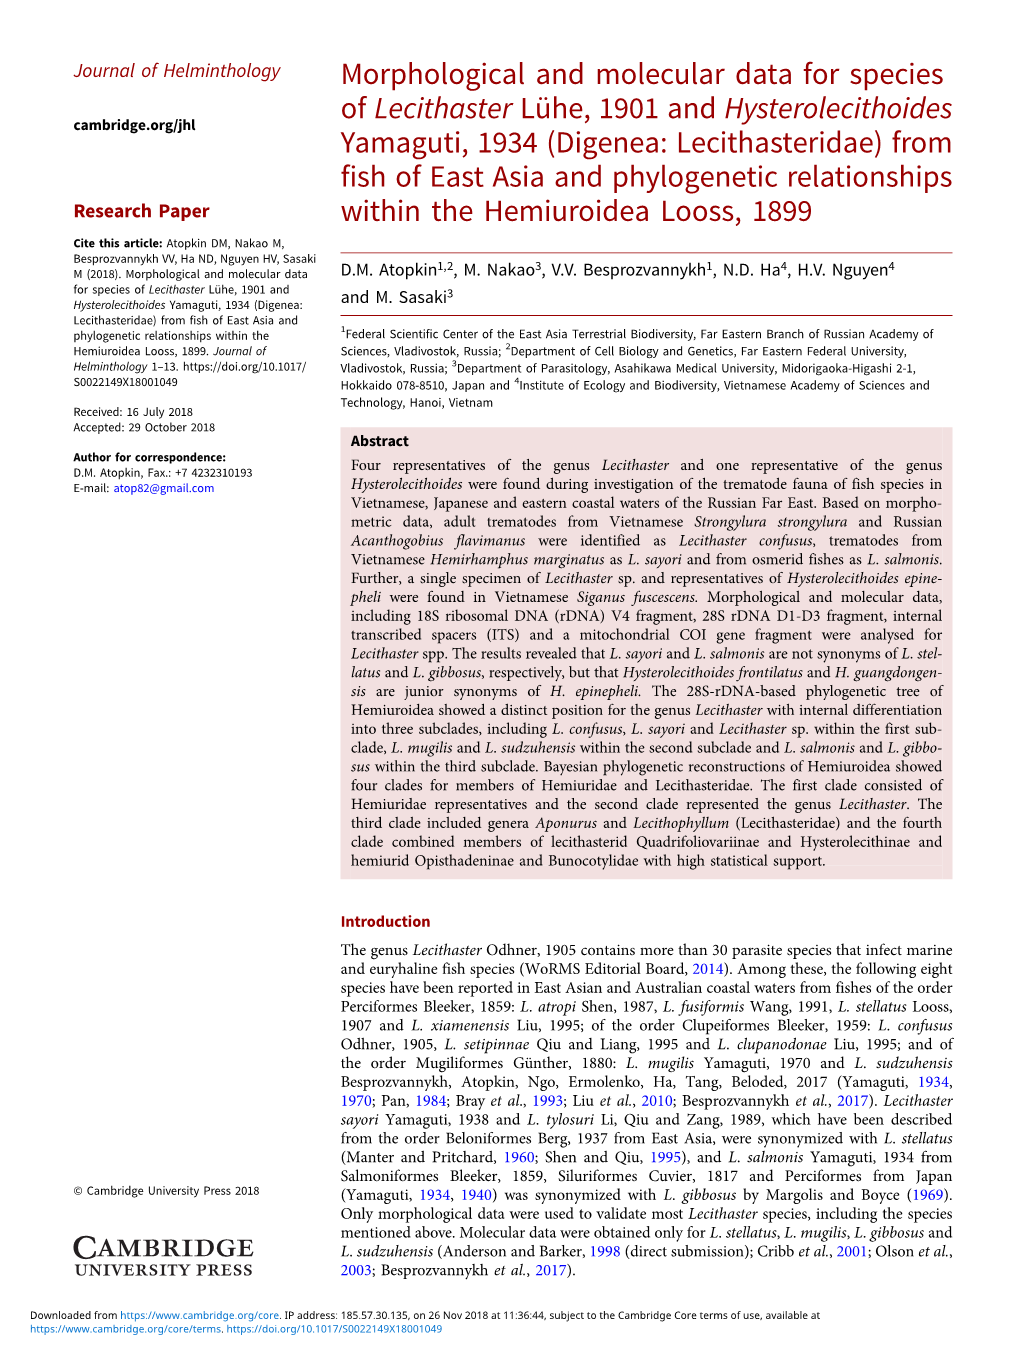 Morphological and Molecular Data for Species of Lecithaster Lühe, 1901